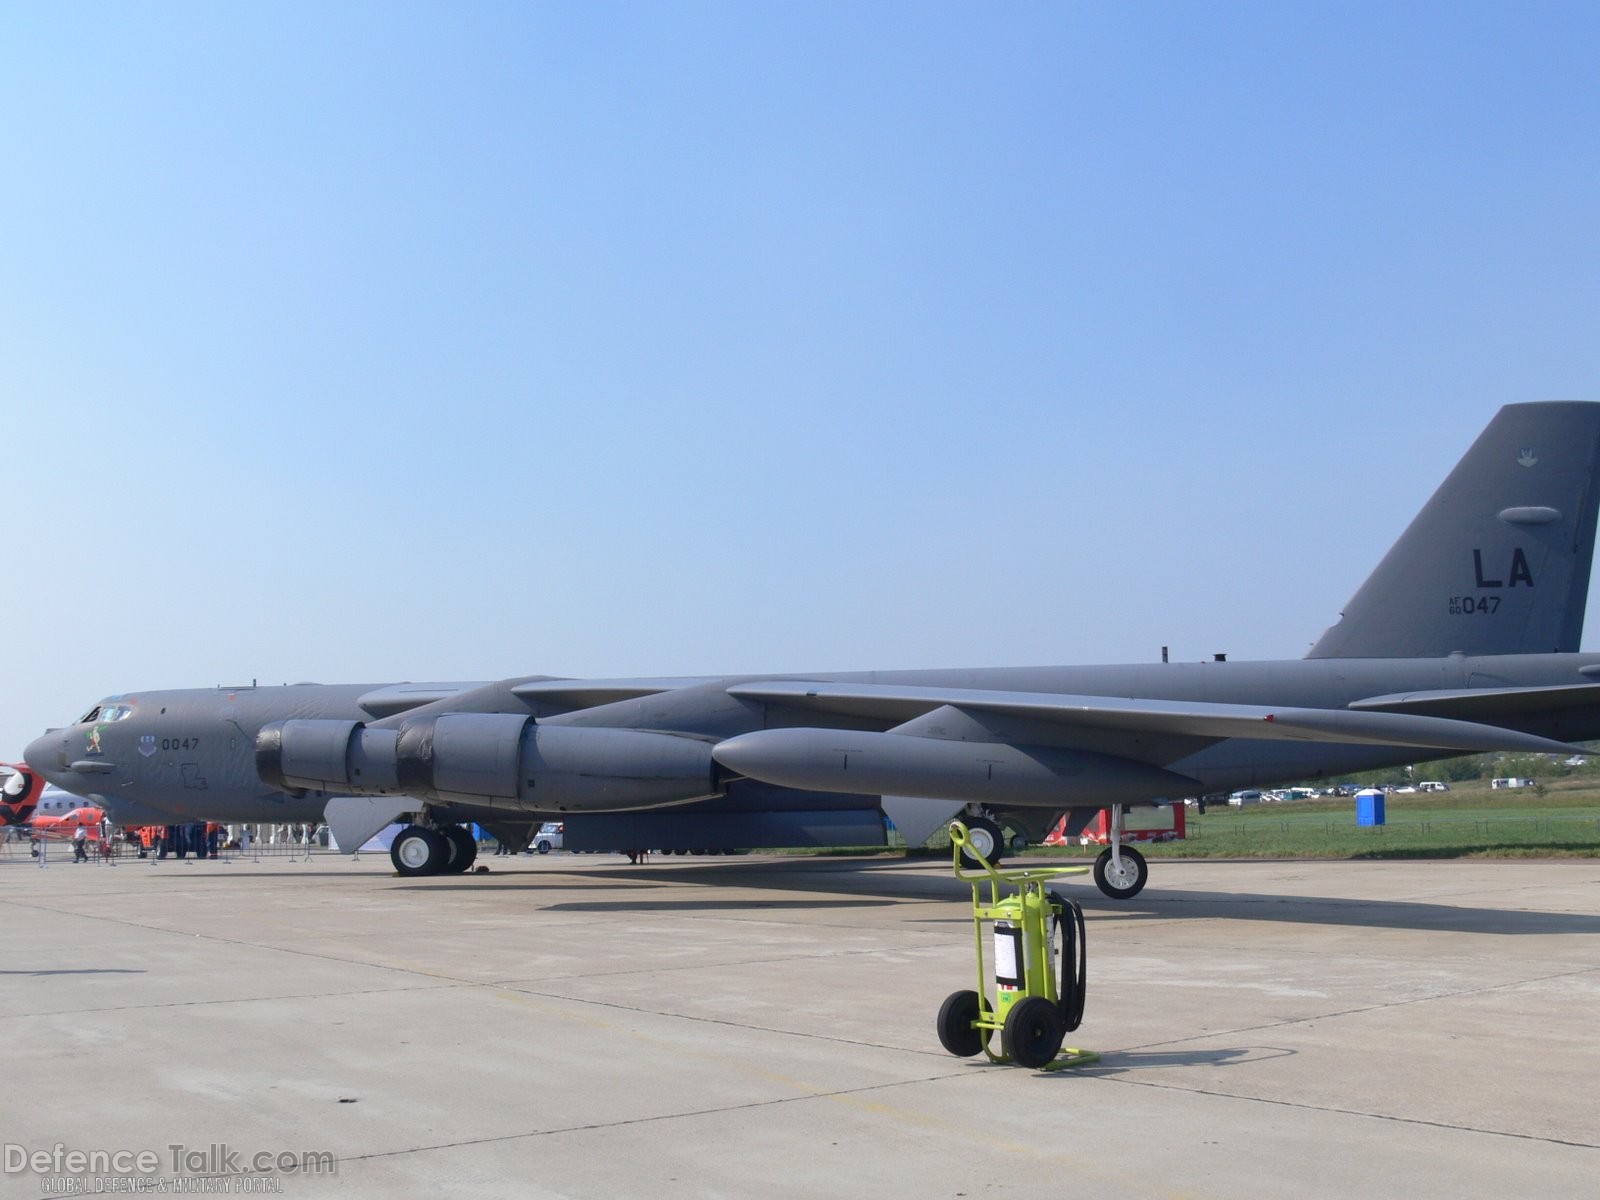 USAF Bomber - MAKS 2007 Air Show